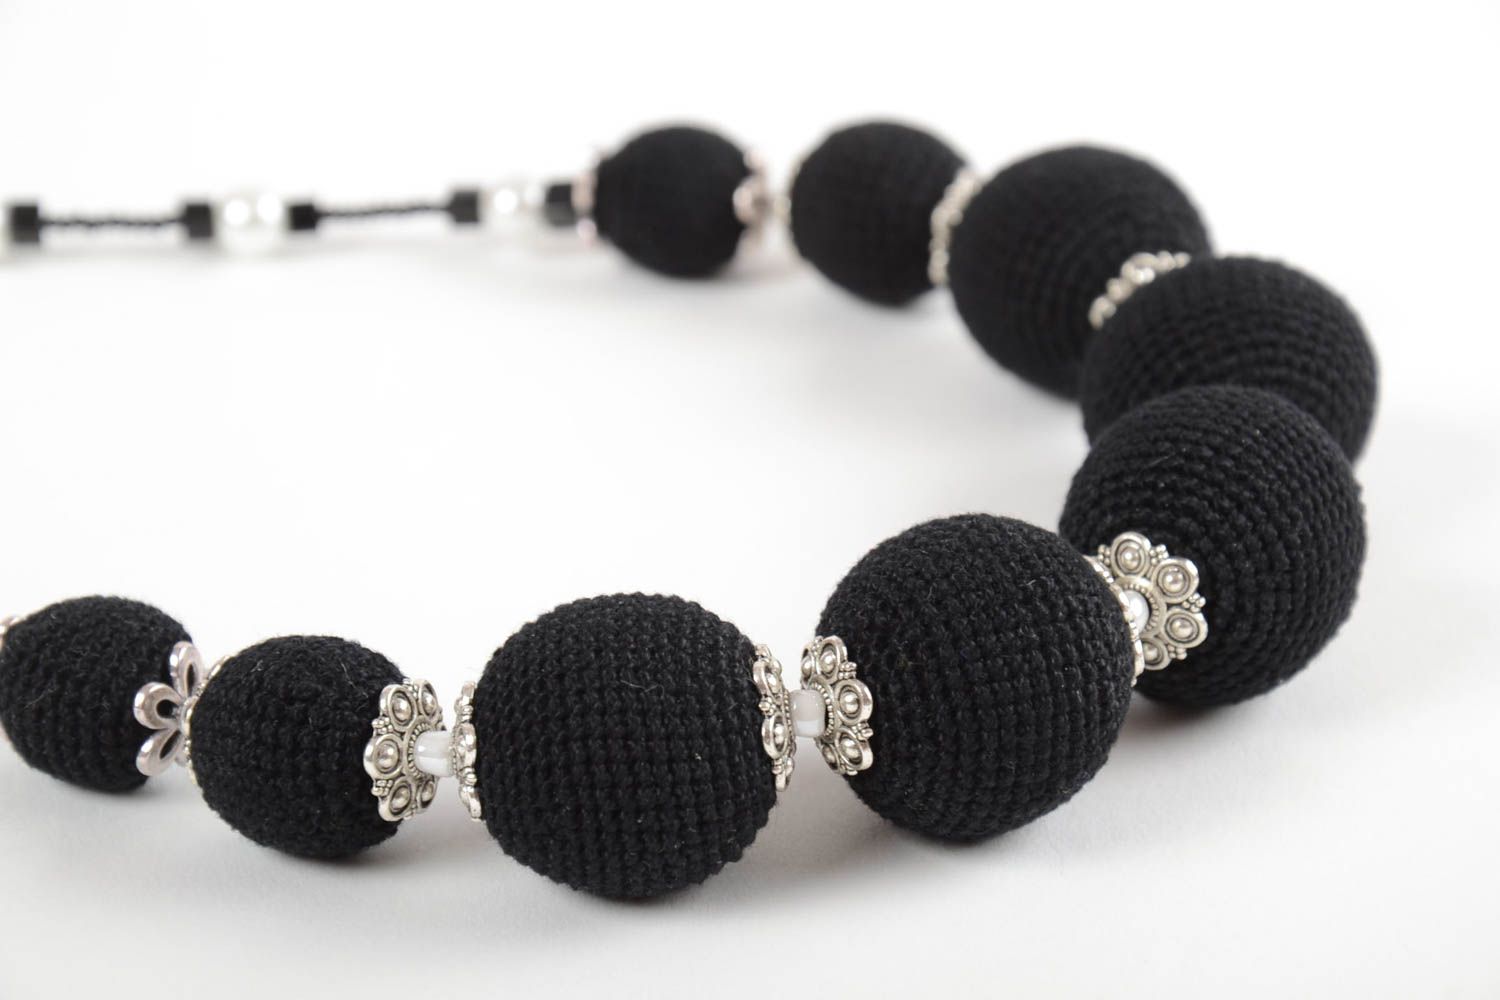 Handmade unusual beaded necklace black and white accessory stylish jewelry photo 3